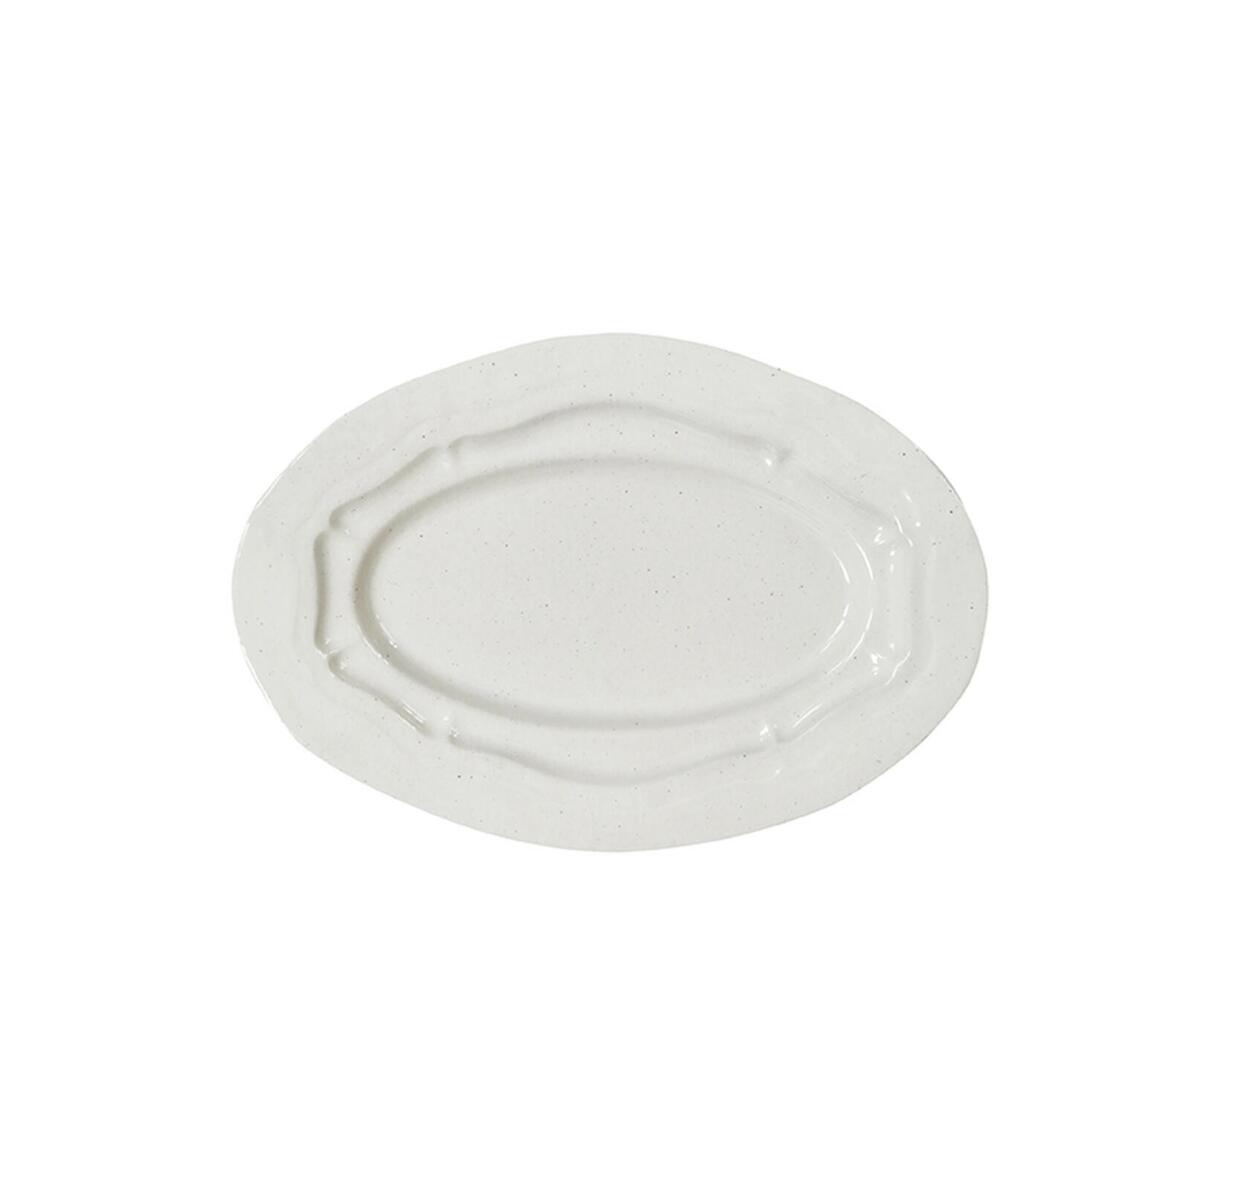 oval dish s refectoire sable brillant ceramic manufacturer